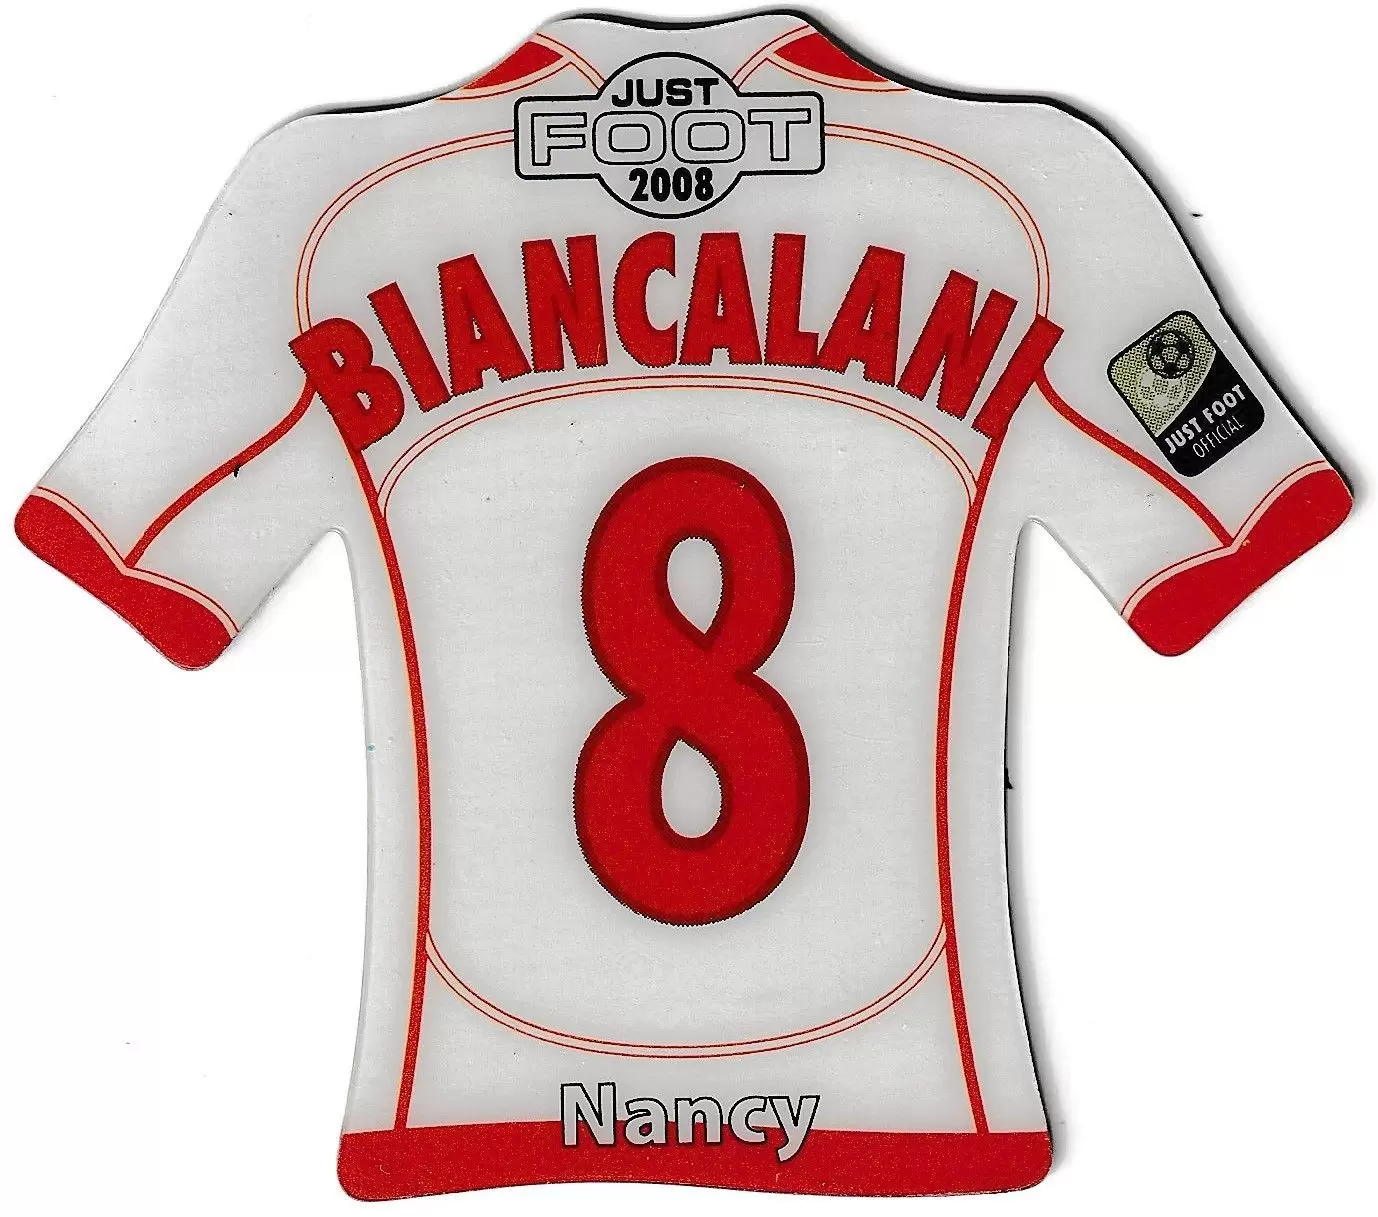 Just Foot 2008 - Nancy 8 - Biancalani